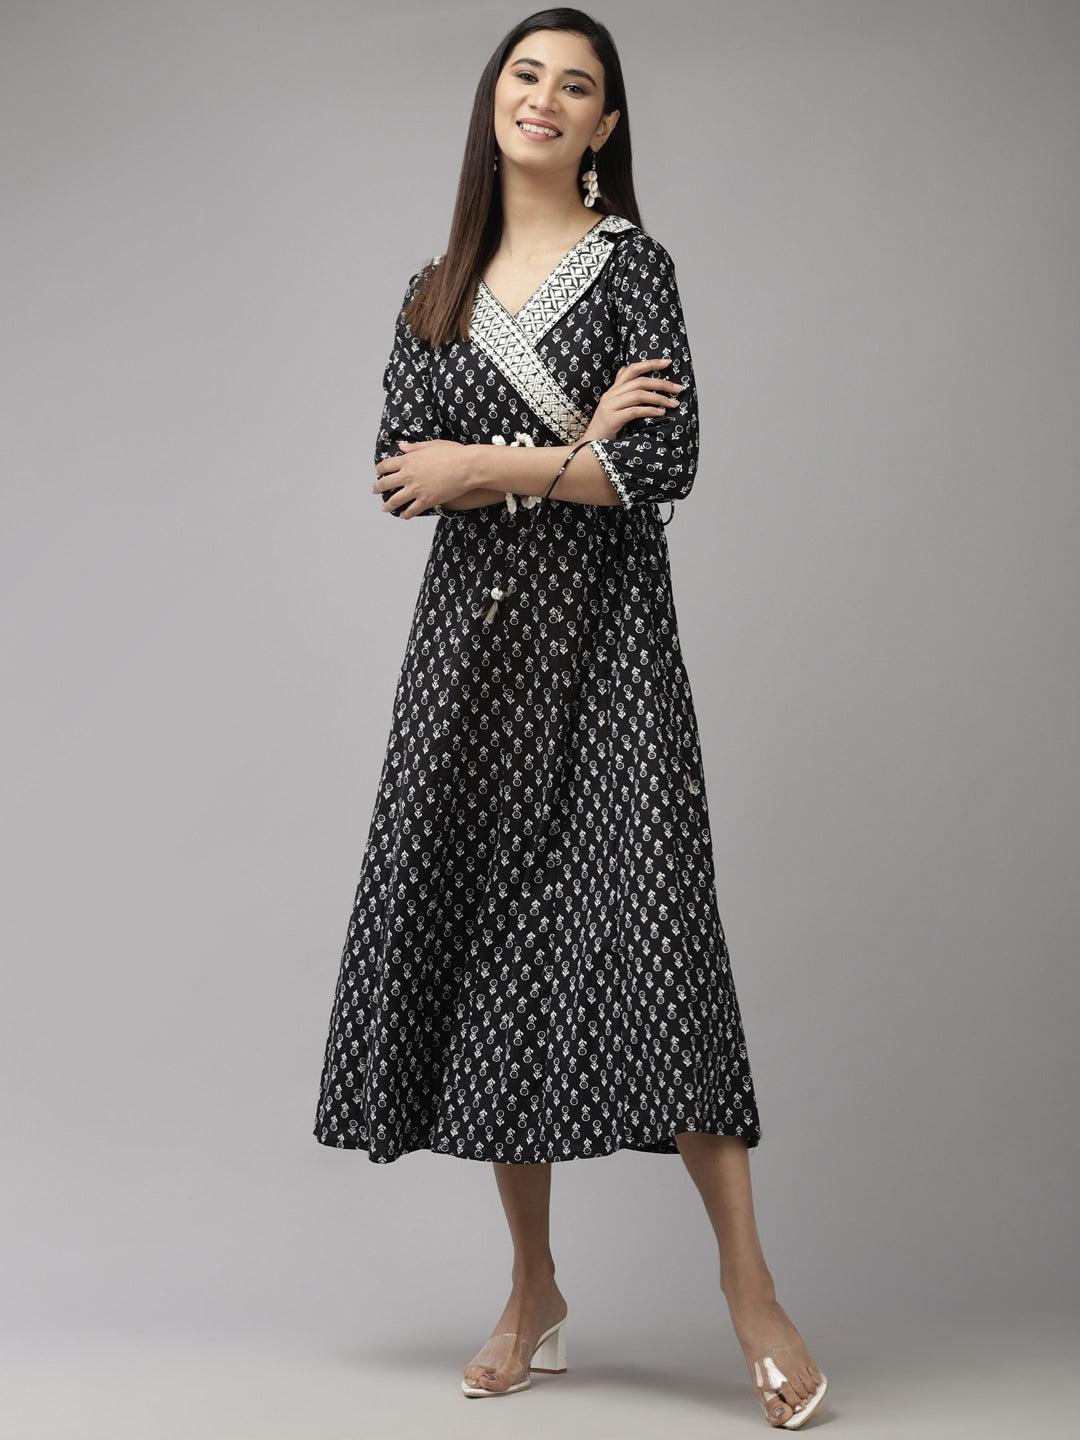 black-white-floral-printed-dress-10104027BK, Women Clothing, Cotton Dress